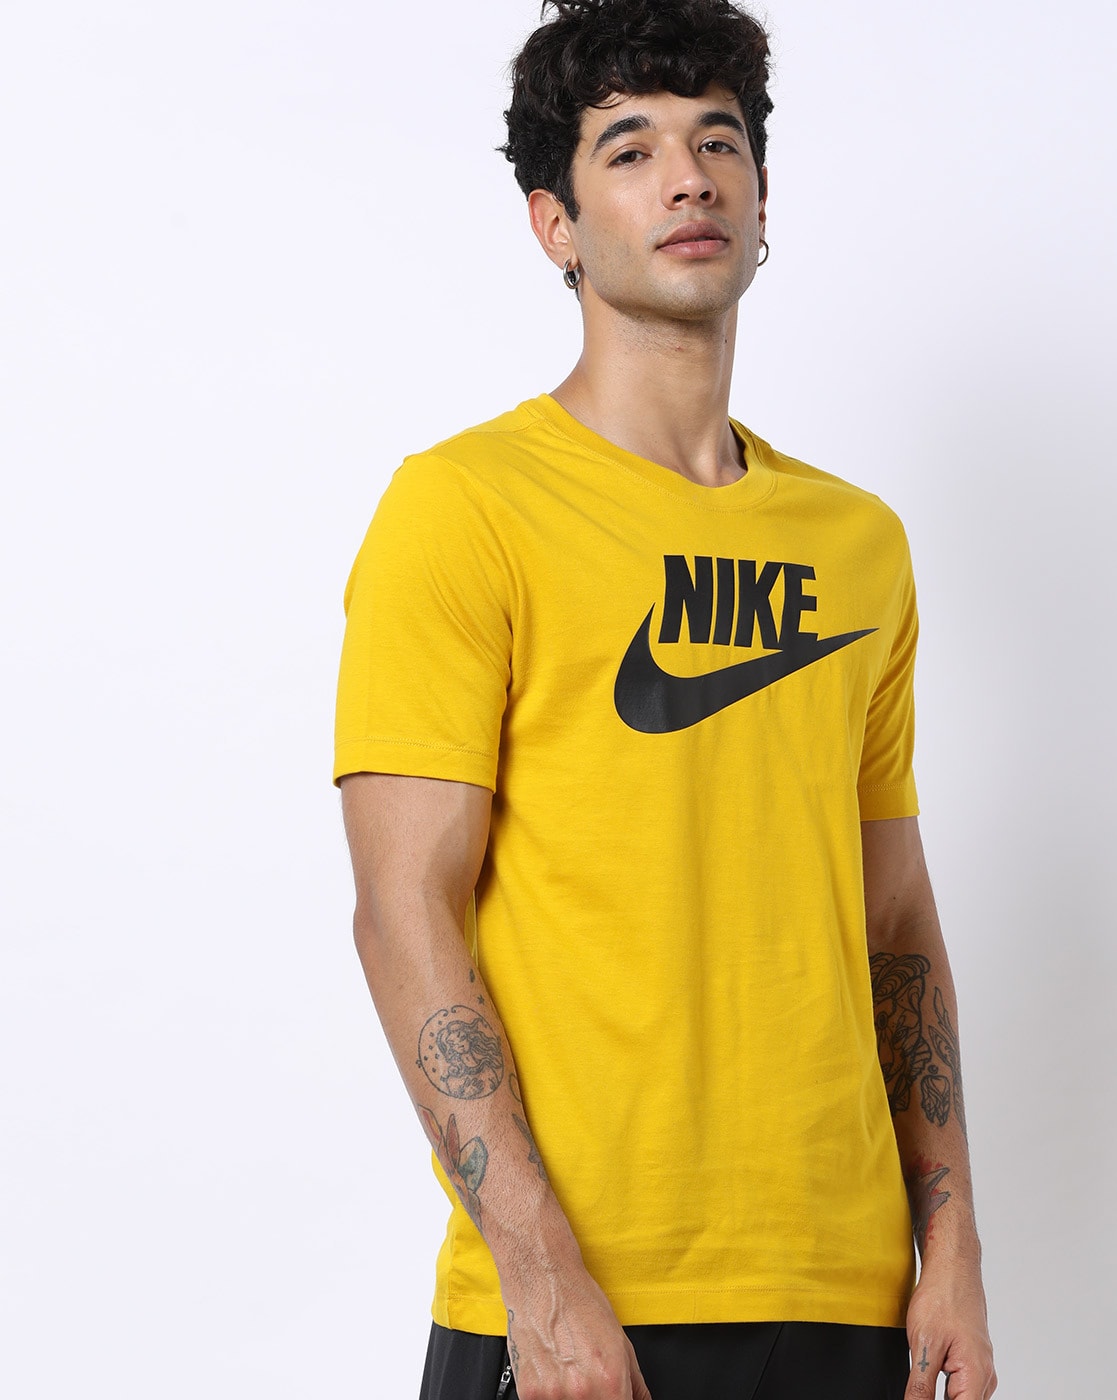 buy nike t shirts online india